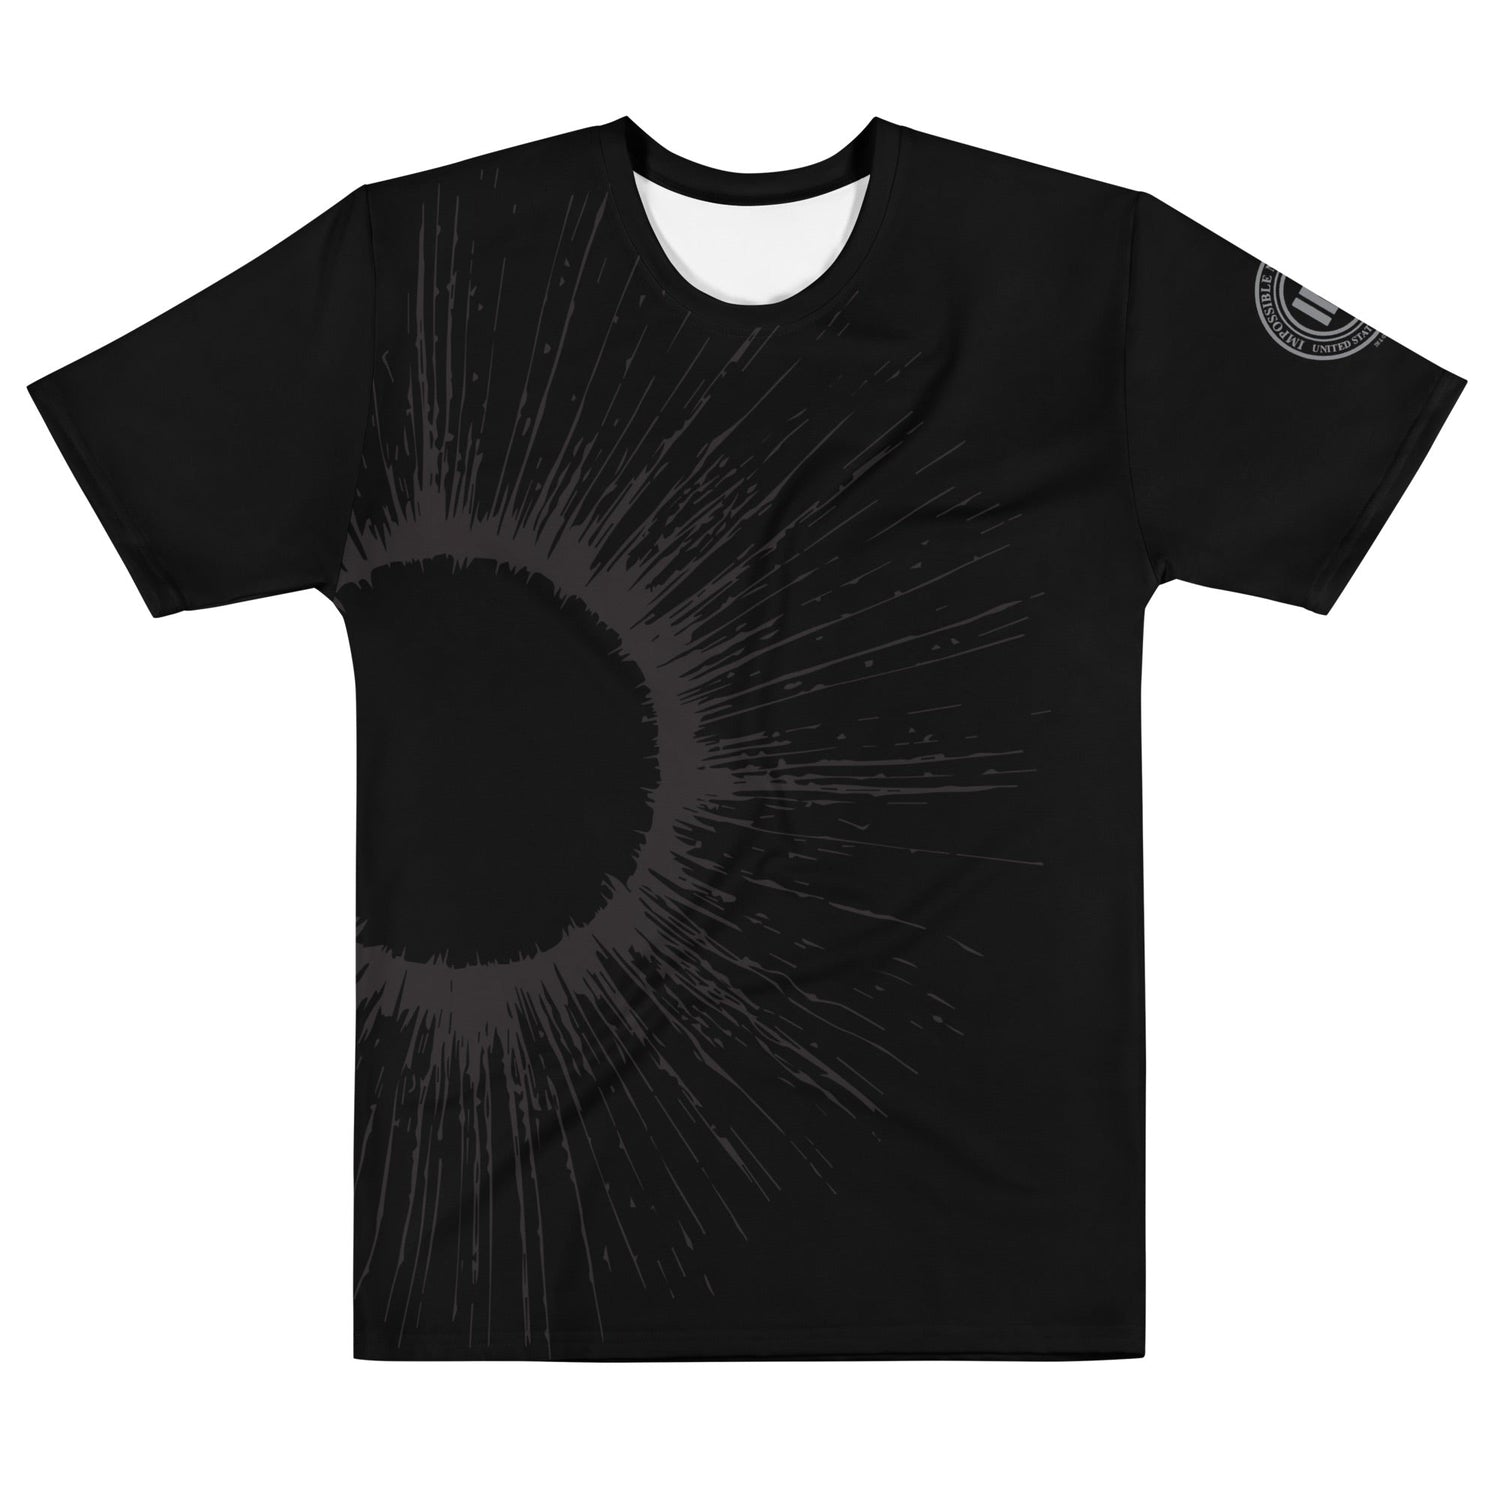 Mission: Impossible - Dead Reckoning Sunburst T - Shirt - Paramount Shop